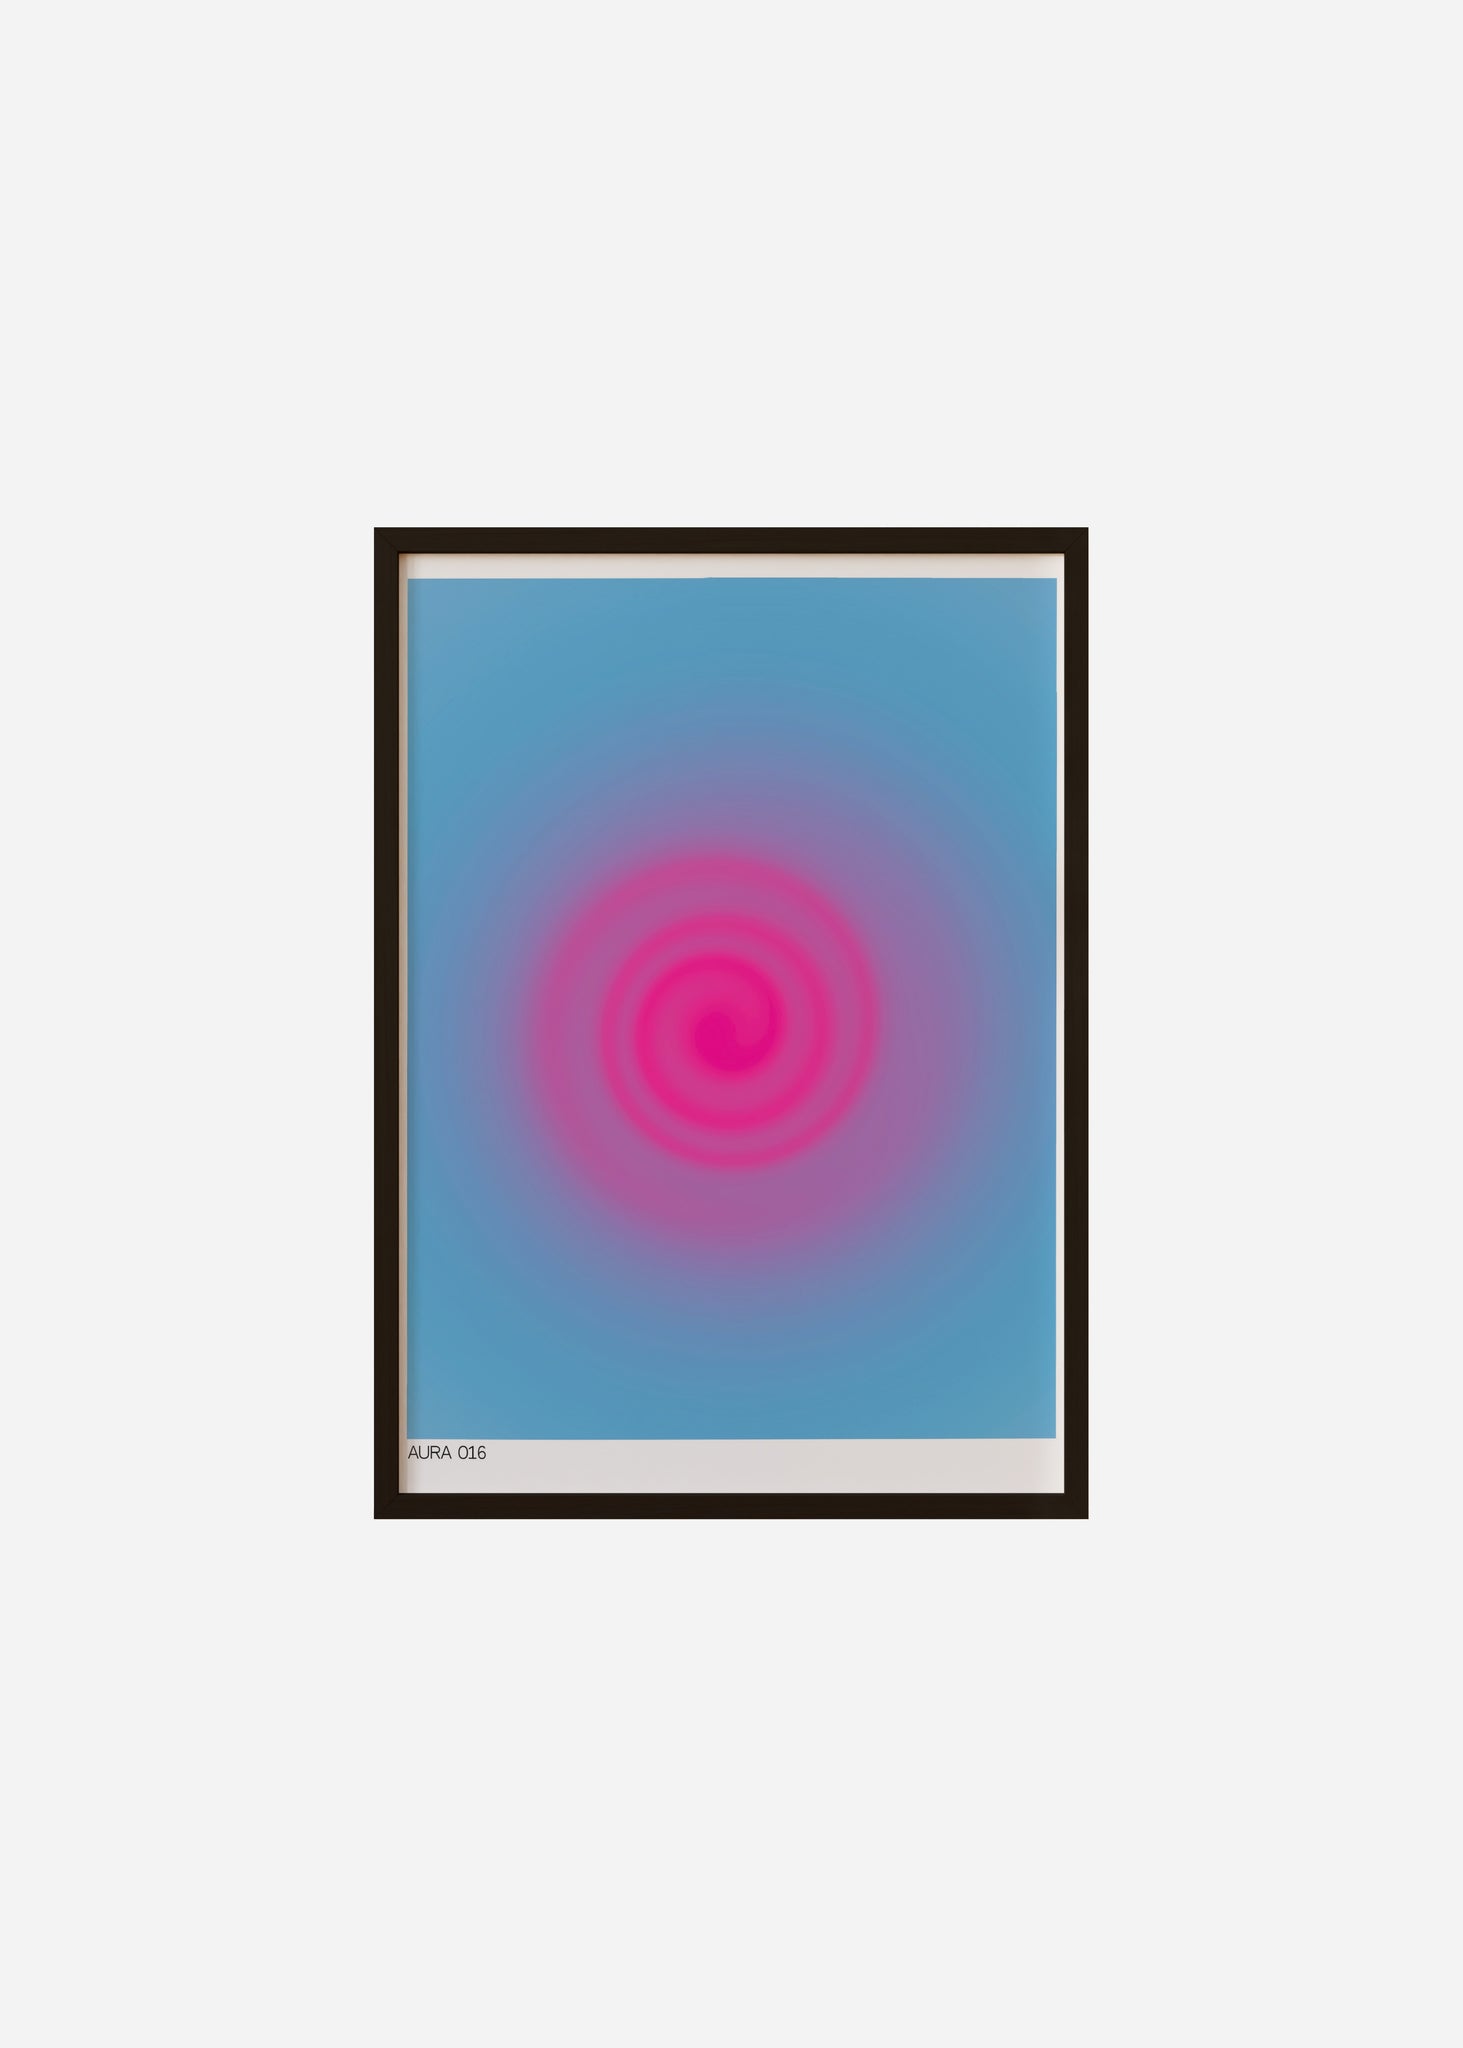 aura 016 Framed Print